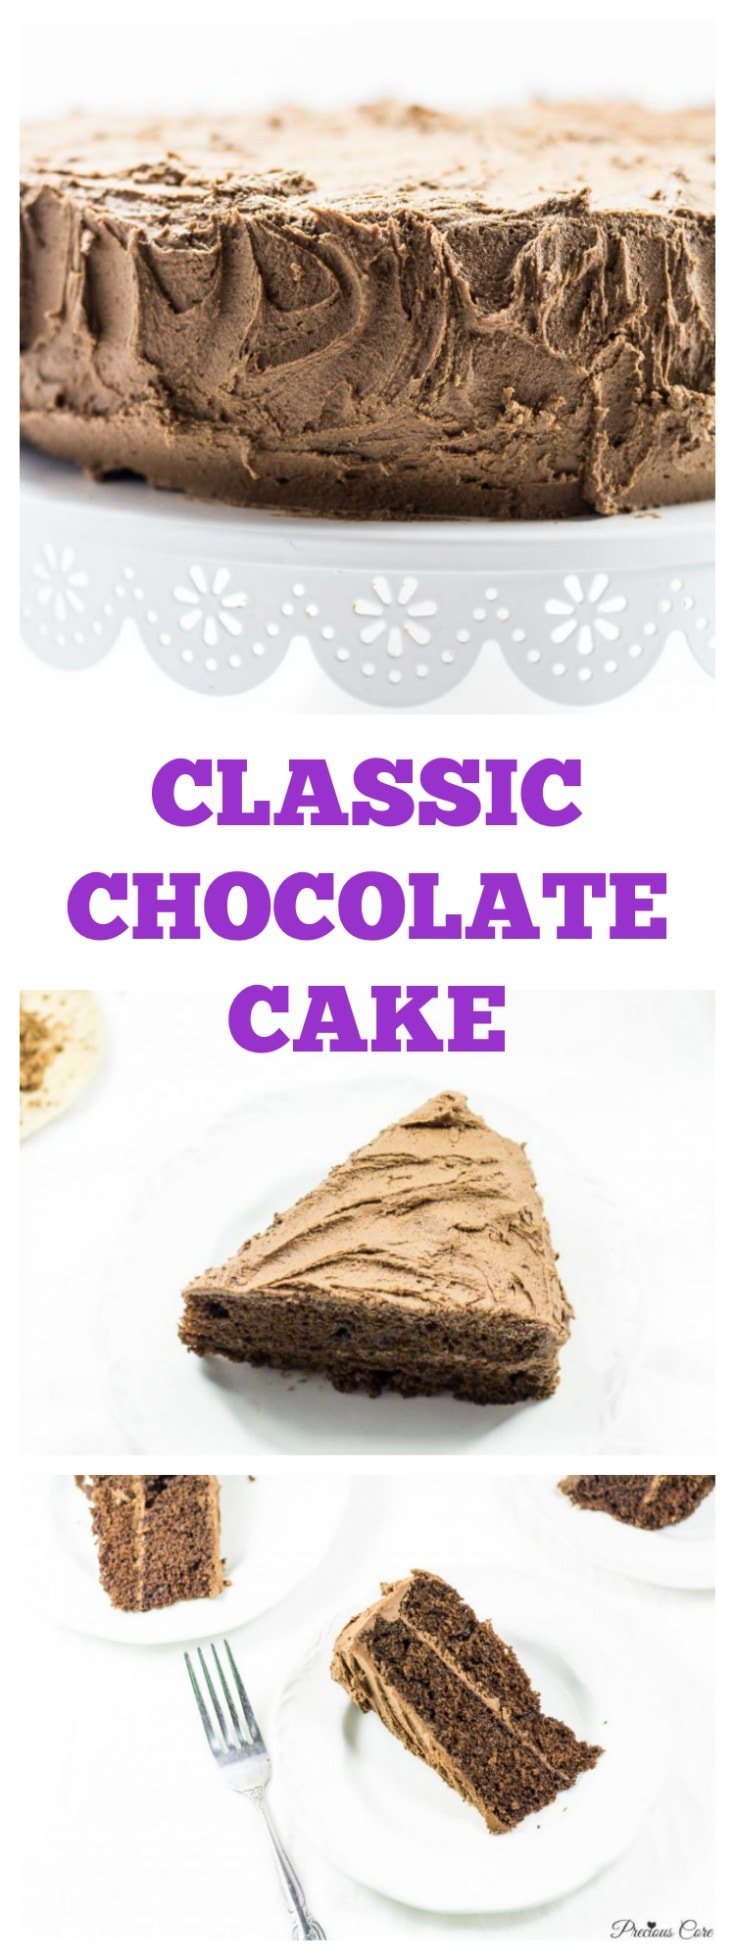 Classic Chocolate Cake - Precious Core